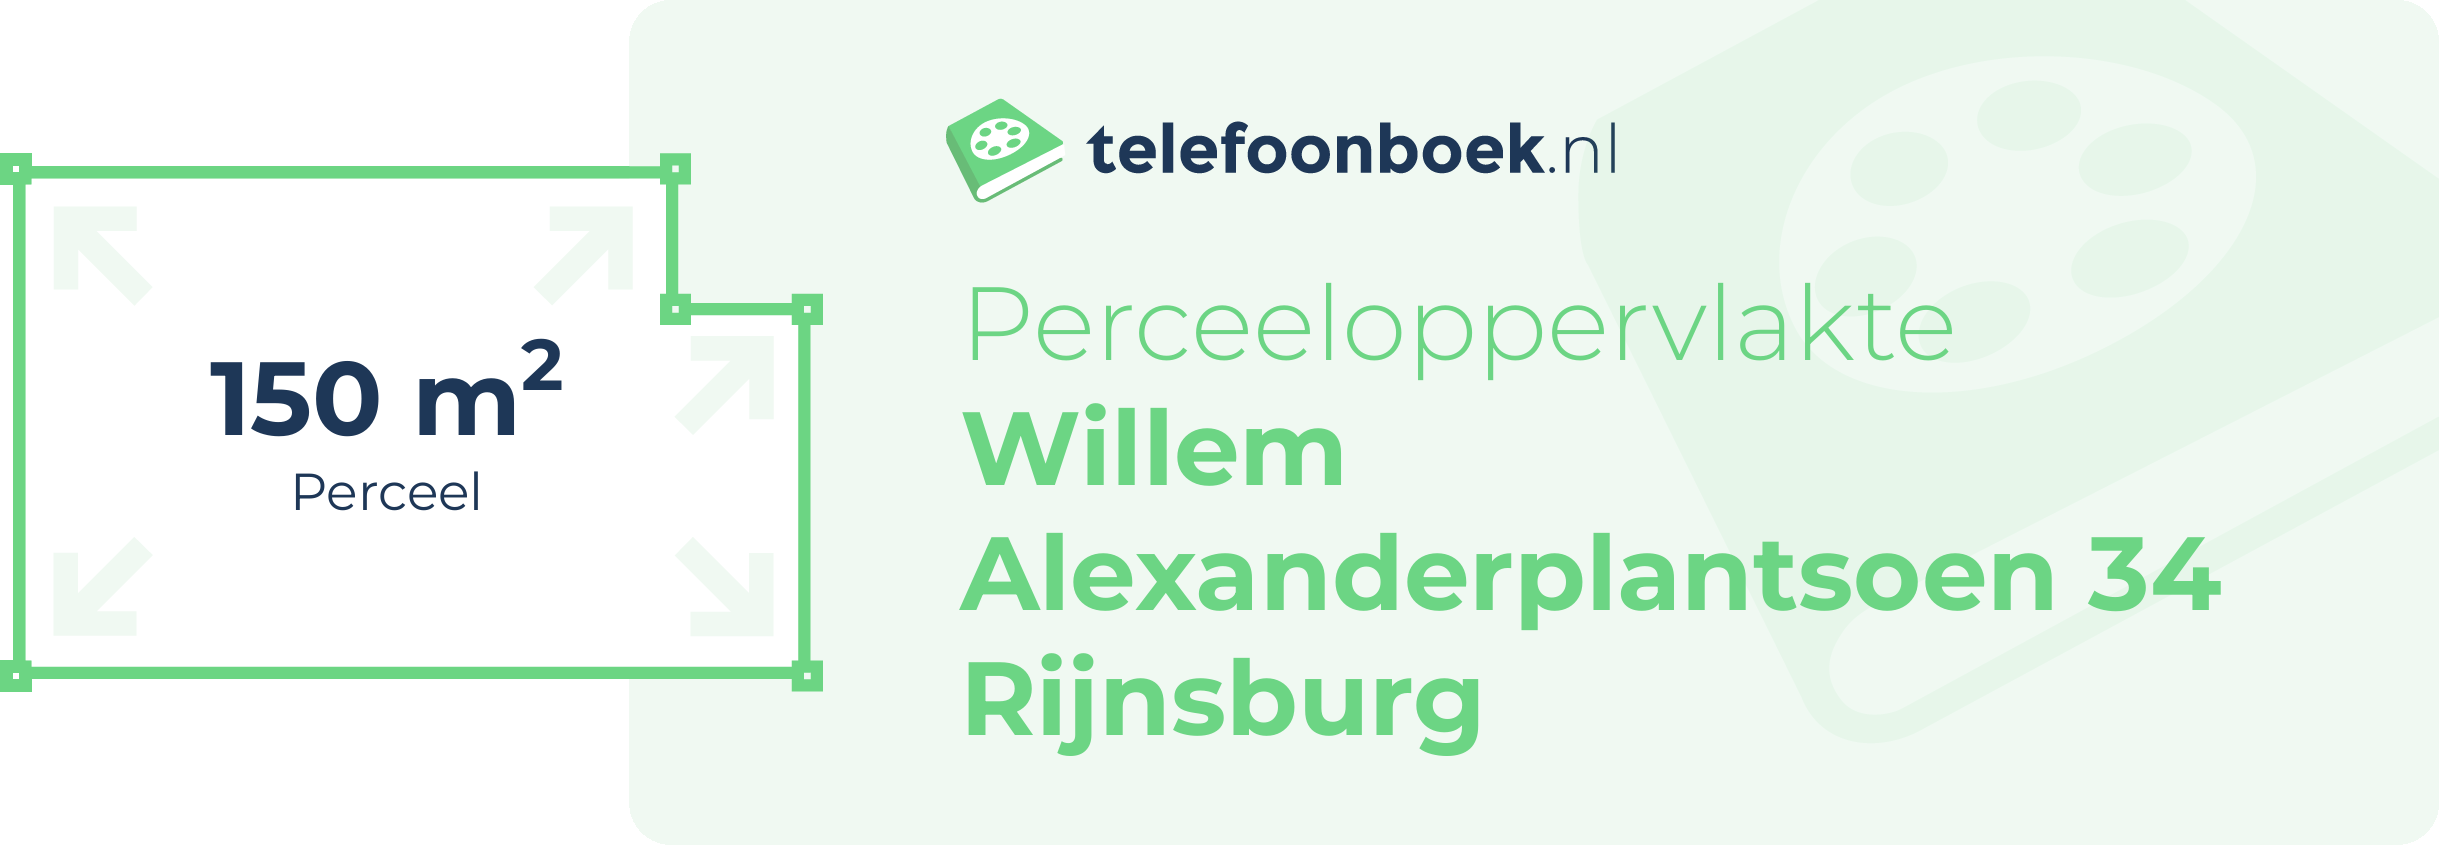 Perceeloppervlakte Willem Alexanderplantsoen 34 Rijnsburg